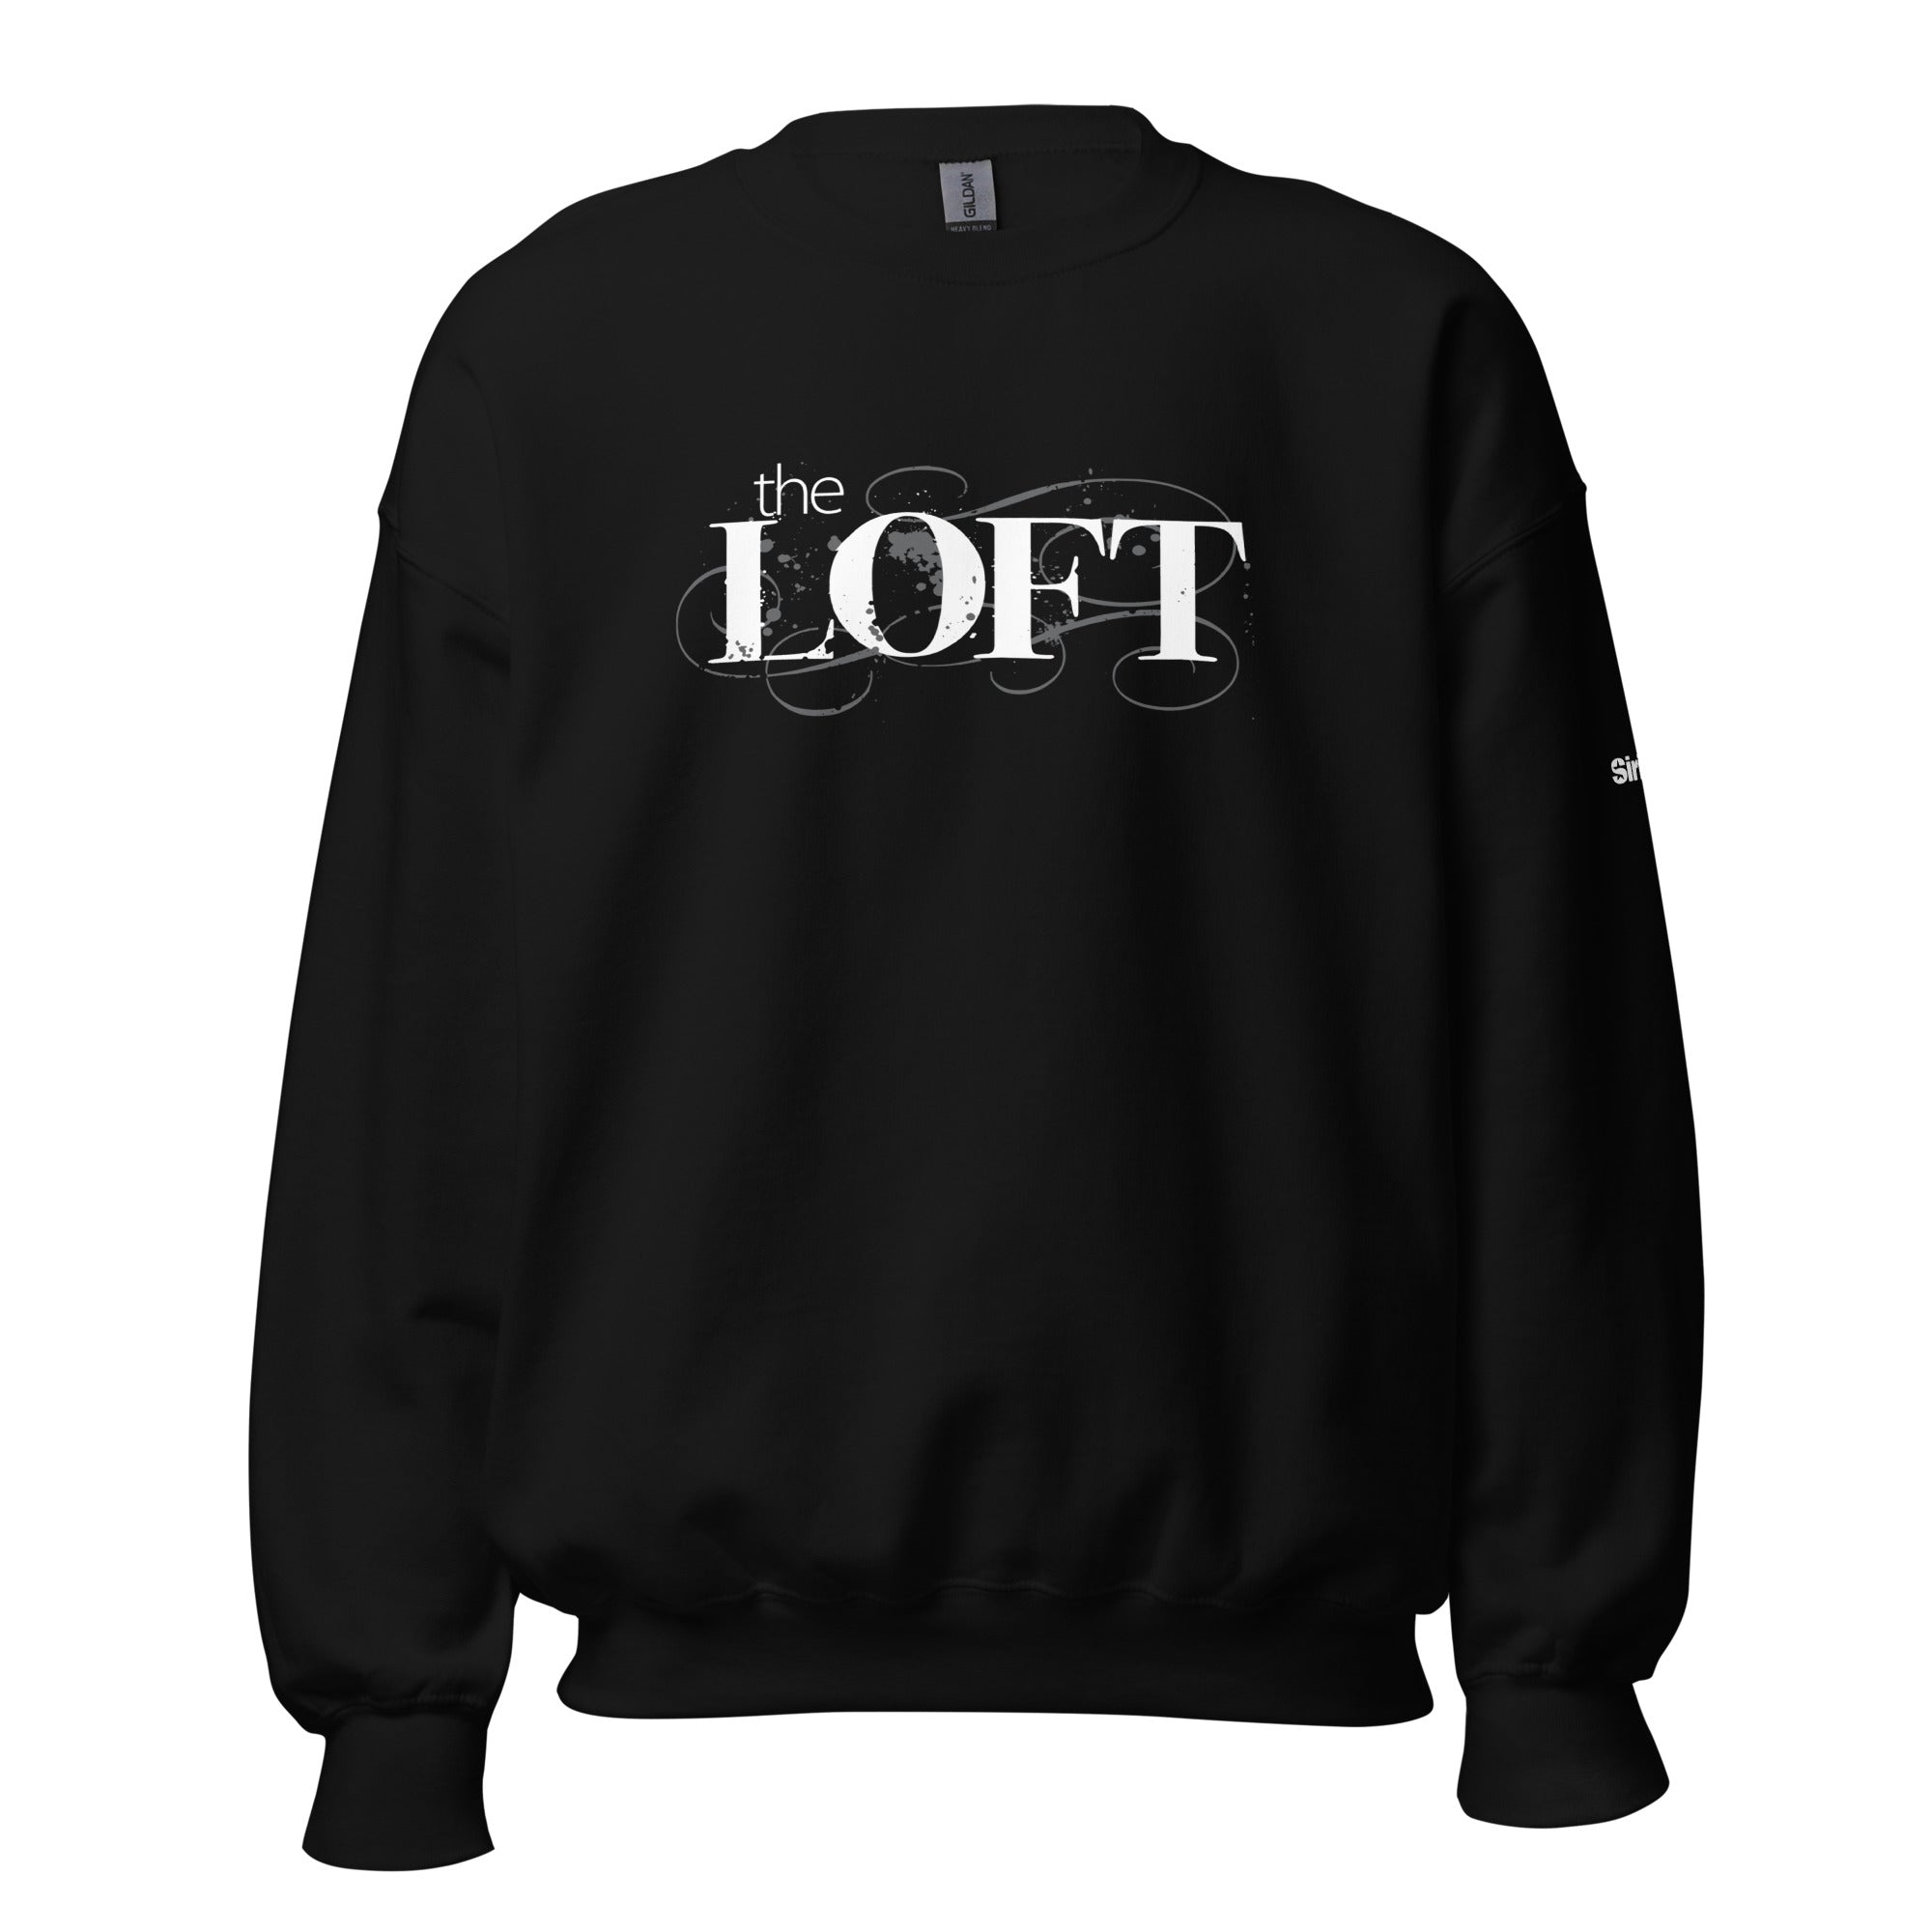 The Loft: Sweatshirt (Black)